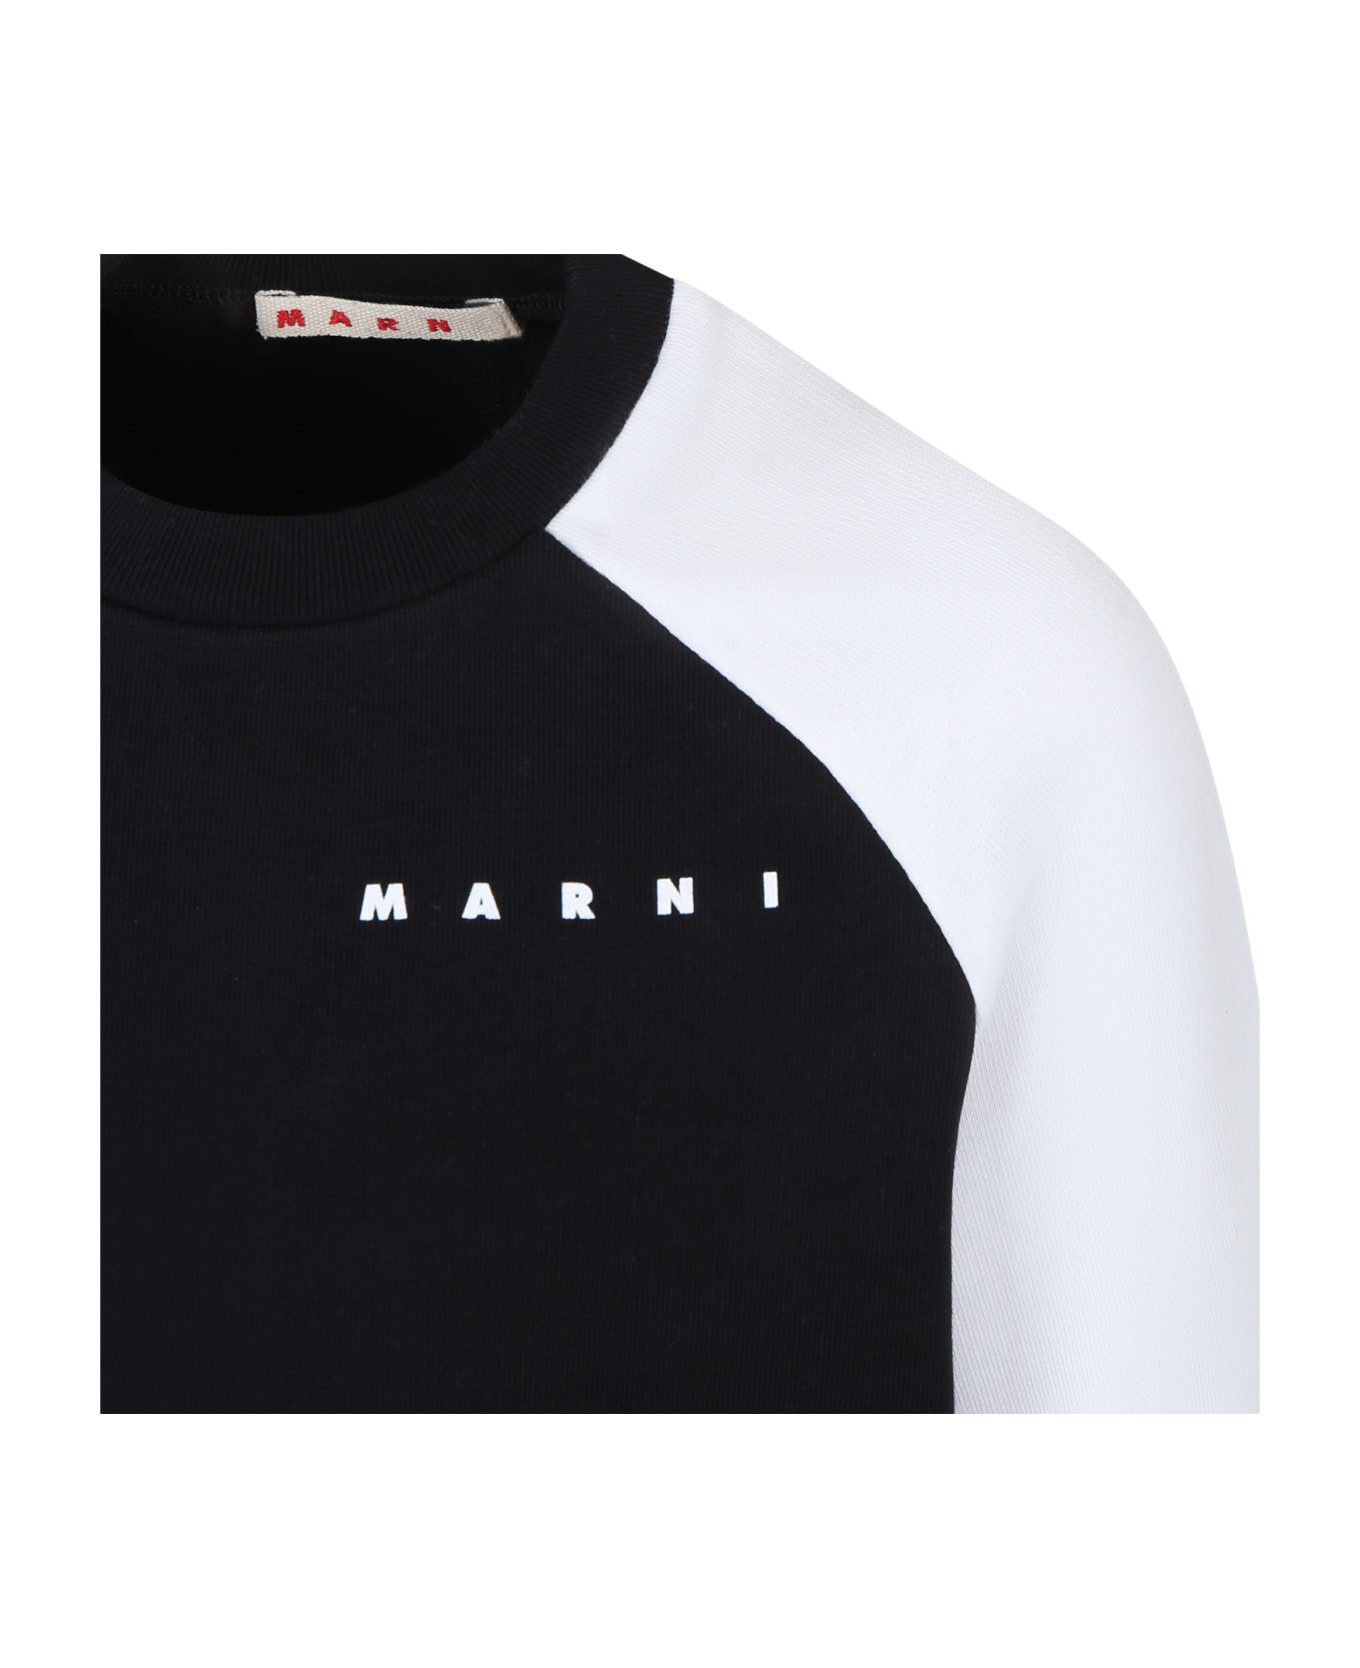 Marni White T-shirt For Kids With Logo - Black